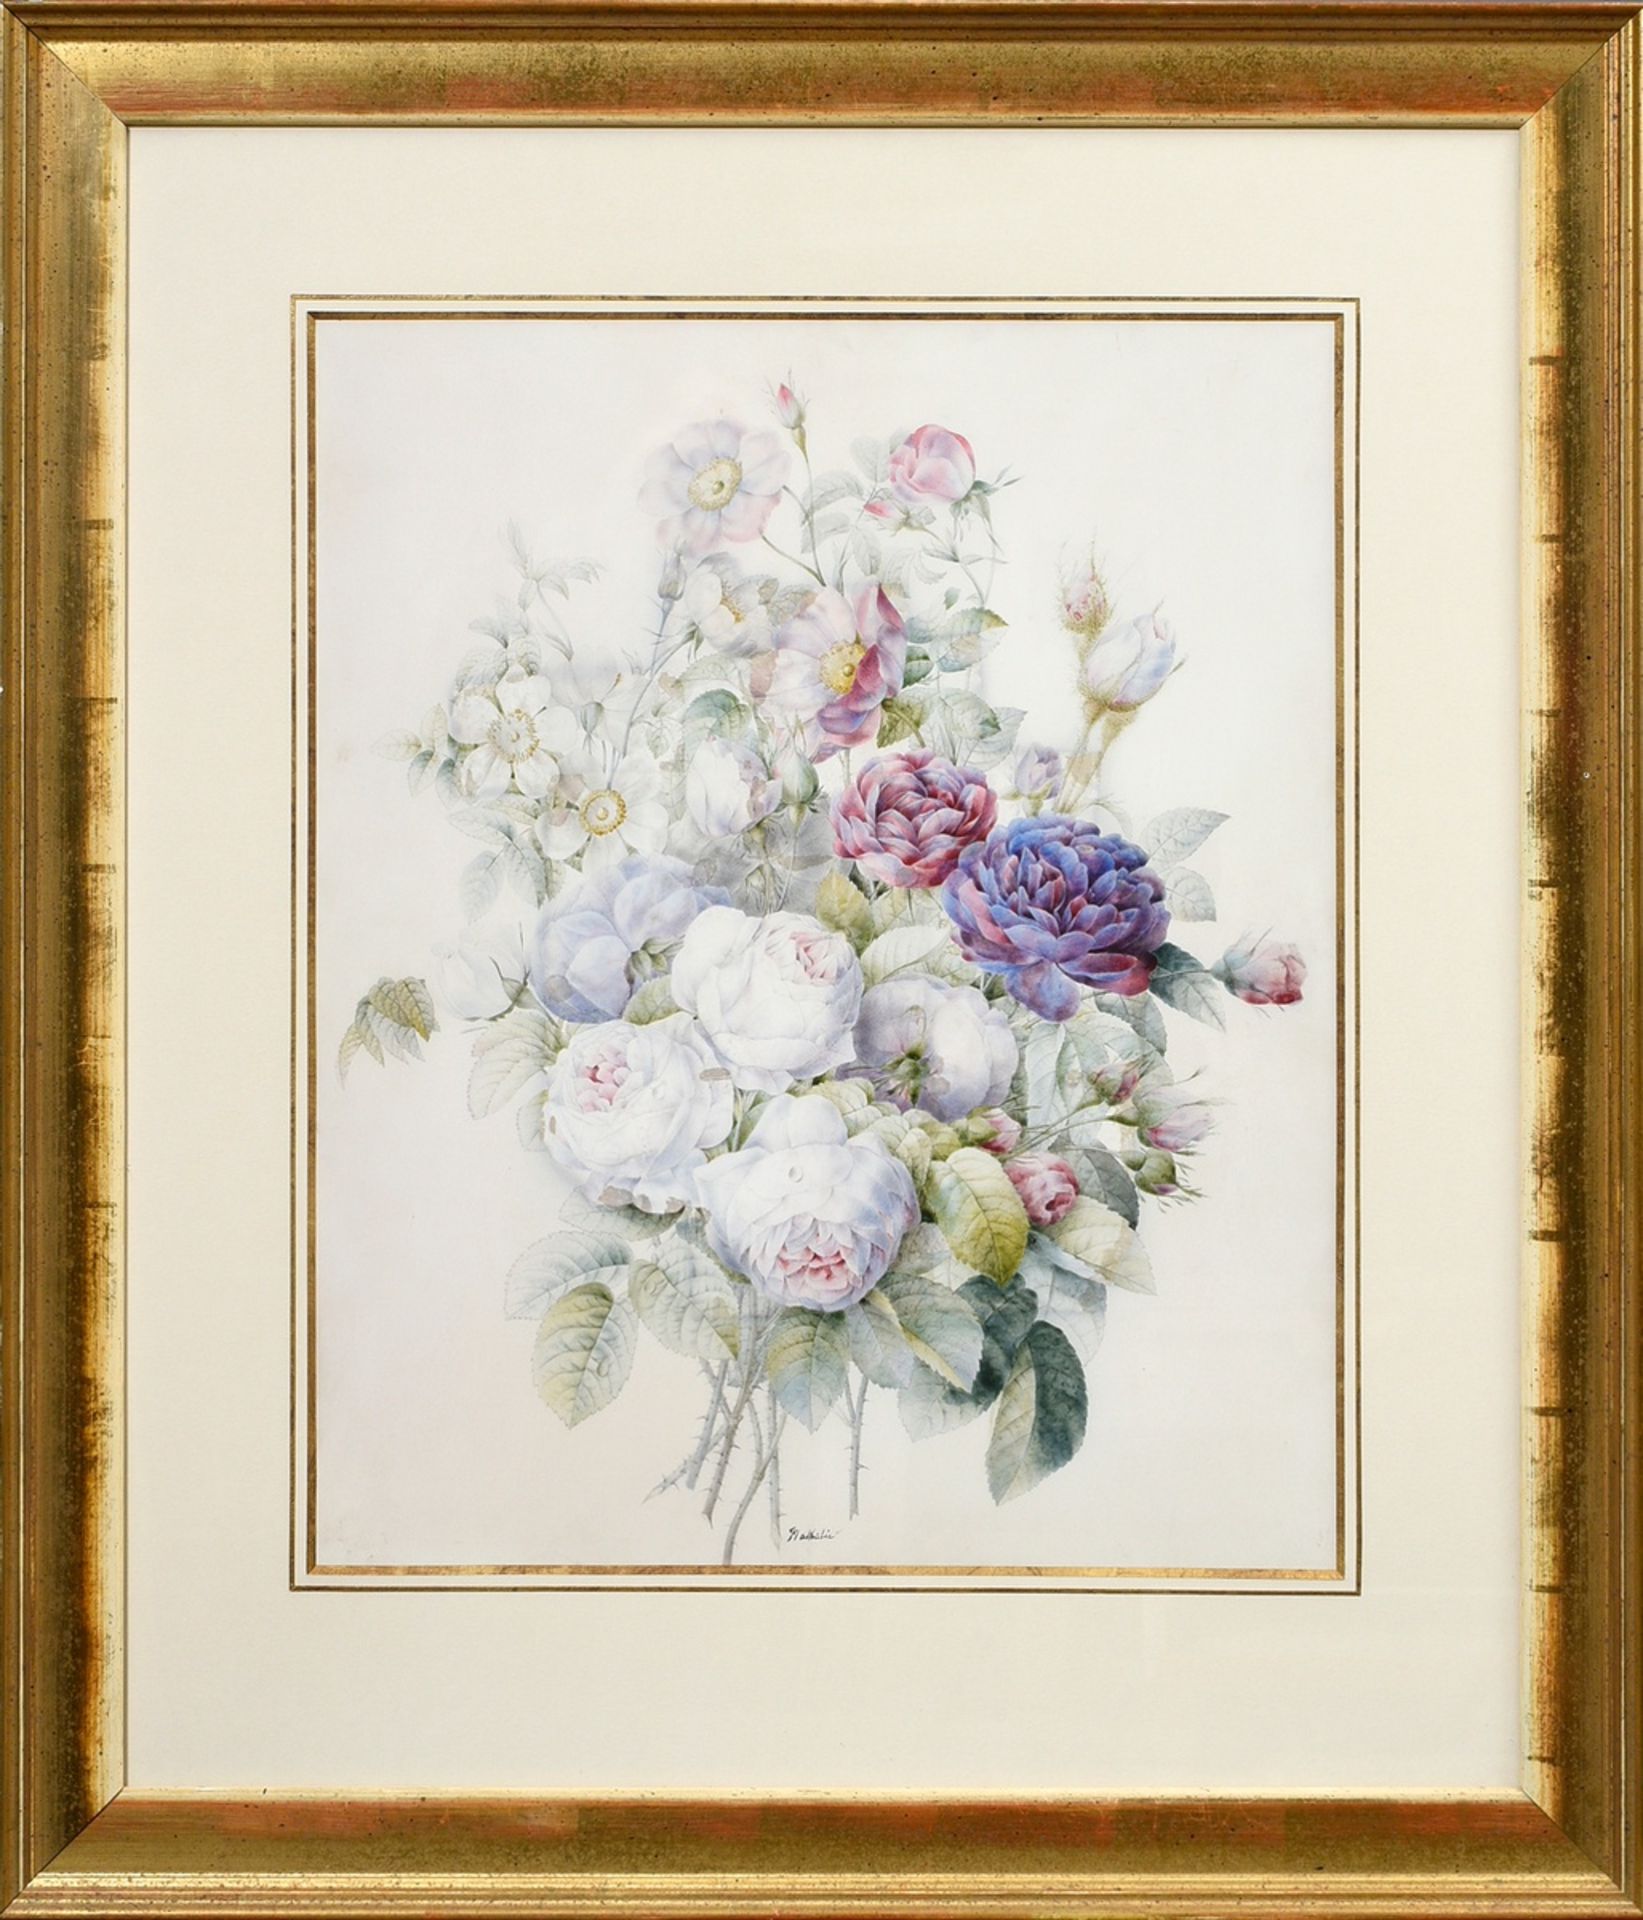 Renaud, Nathalie-Elma (1798-1872) "Bouquet of Roses" c. 1840/50, watercolor, pencil/paper, bottom m - Image 2 of 6